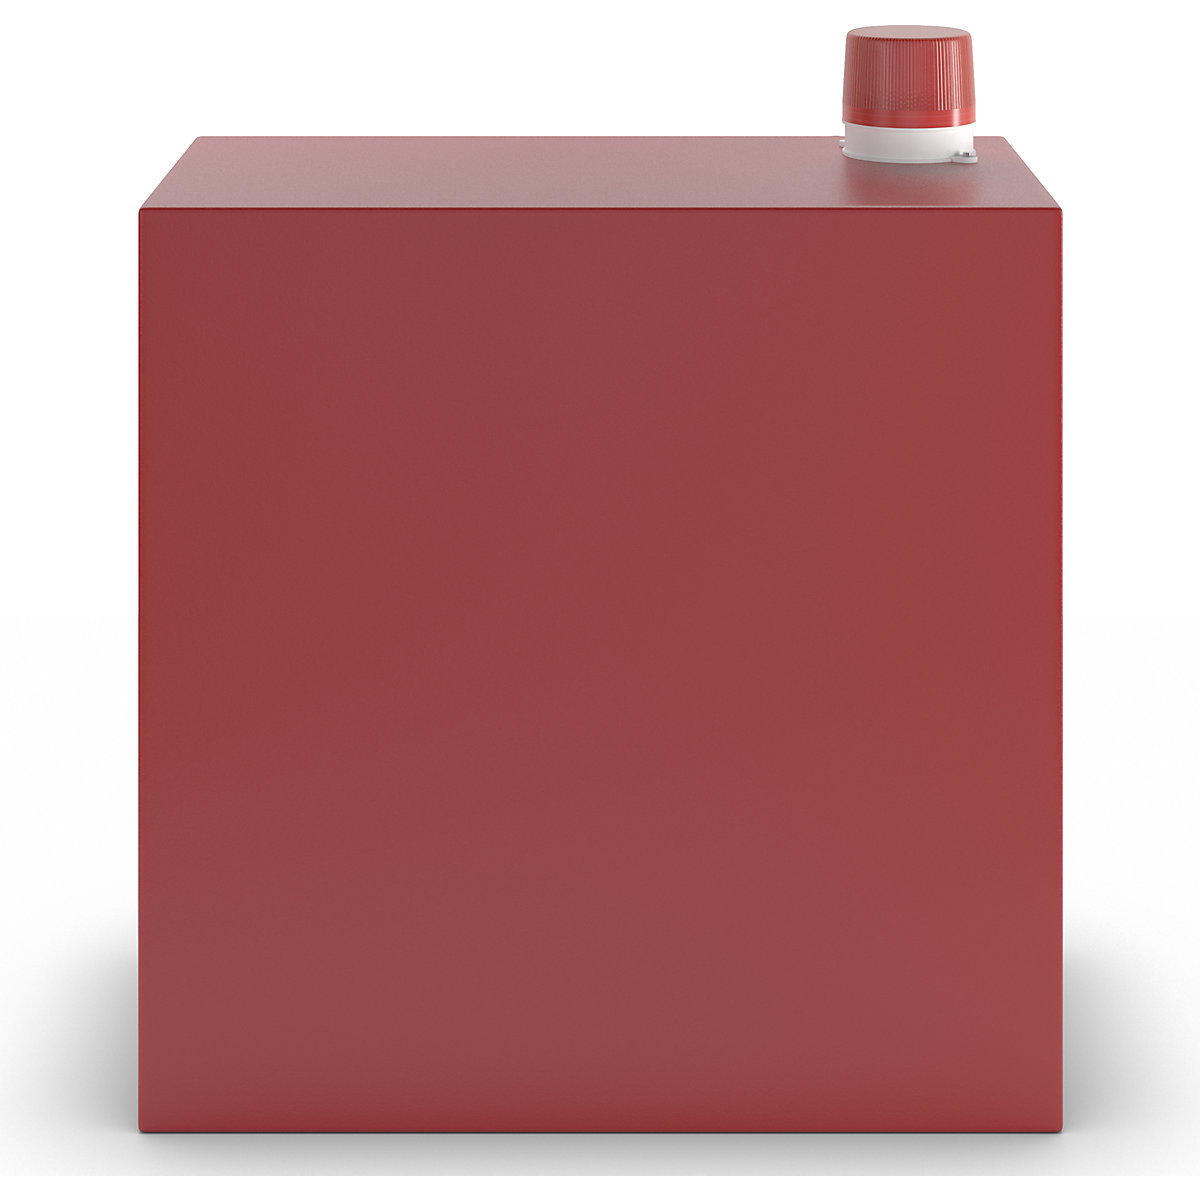 Defibrillator cupboard – Pavoy (Product illustration 4)-3